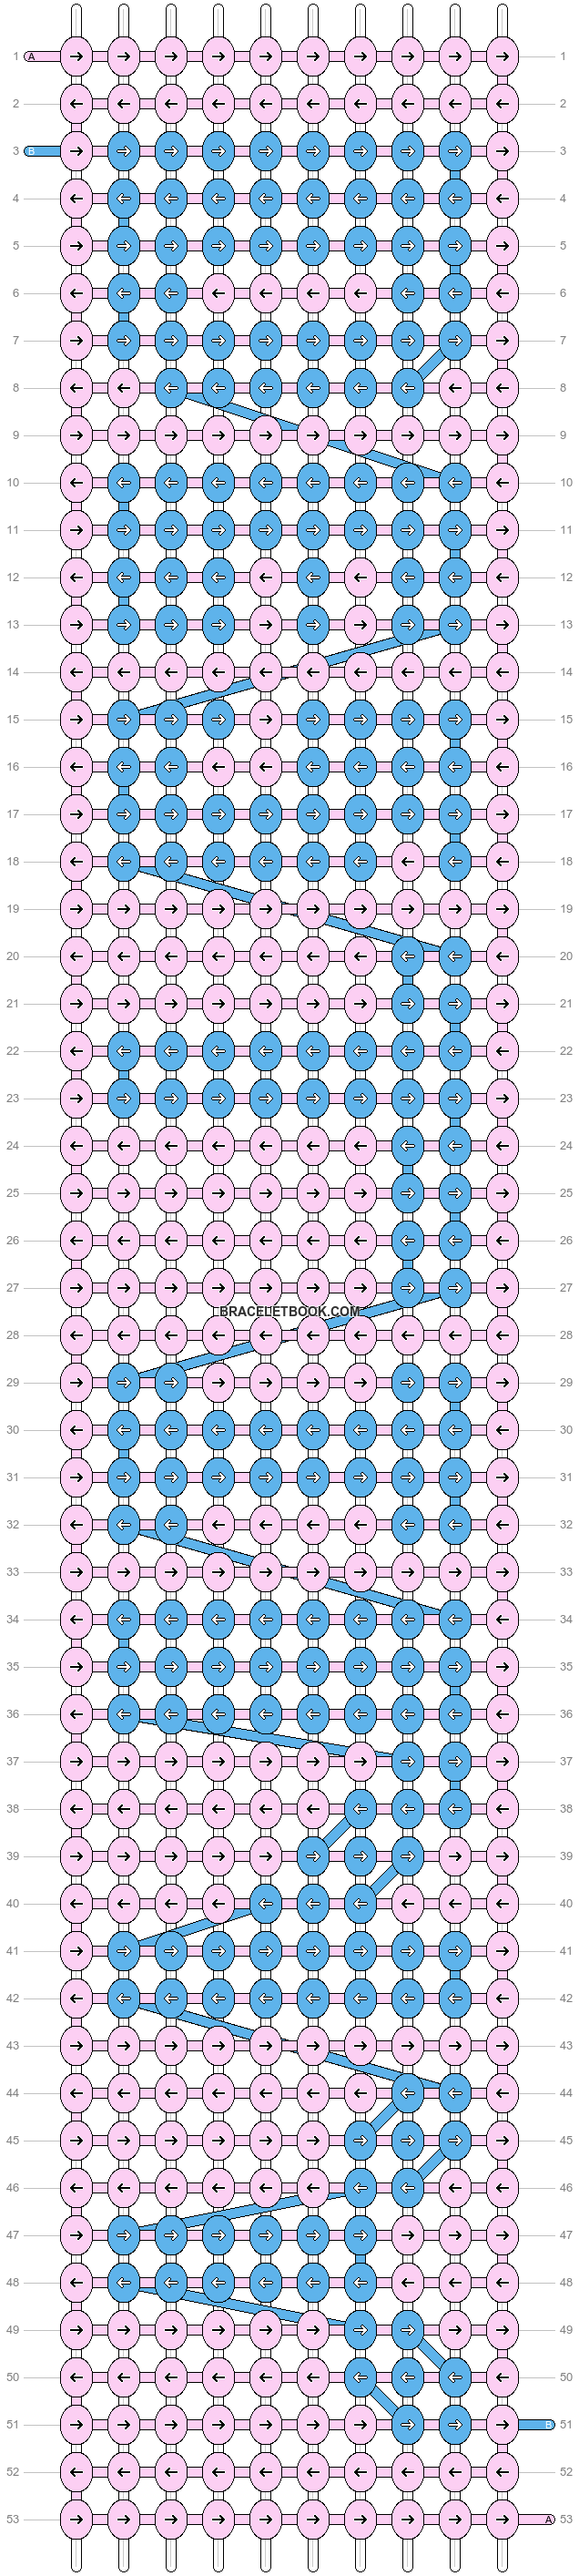 Alpha pattern #1871 pattern